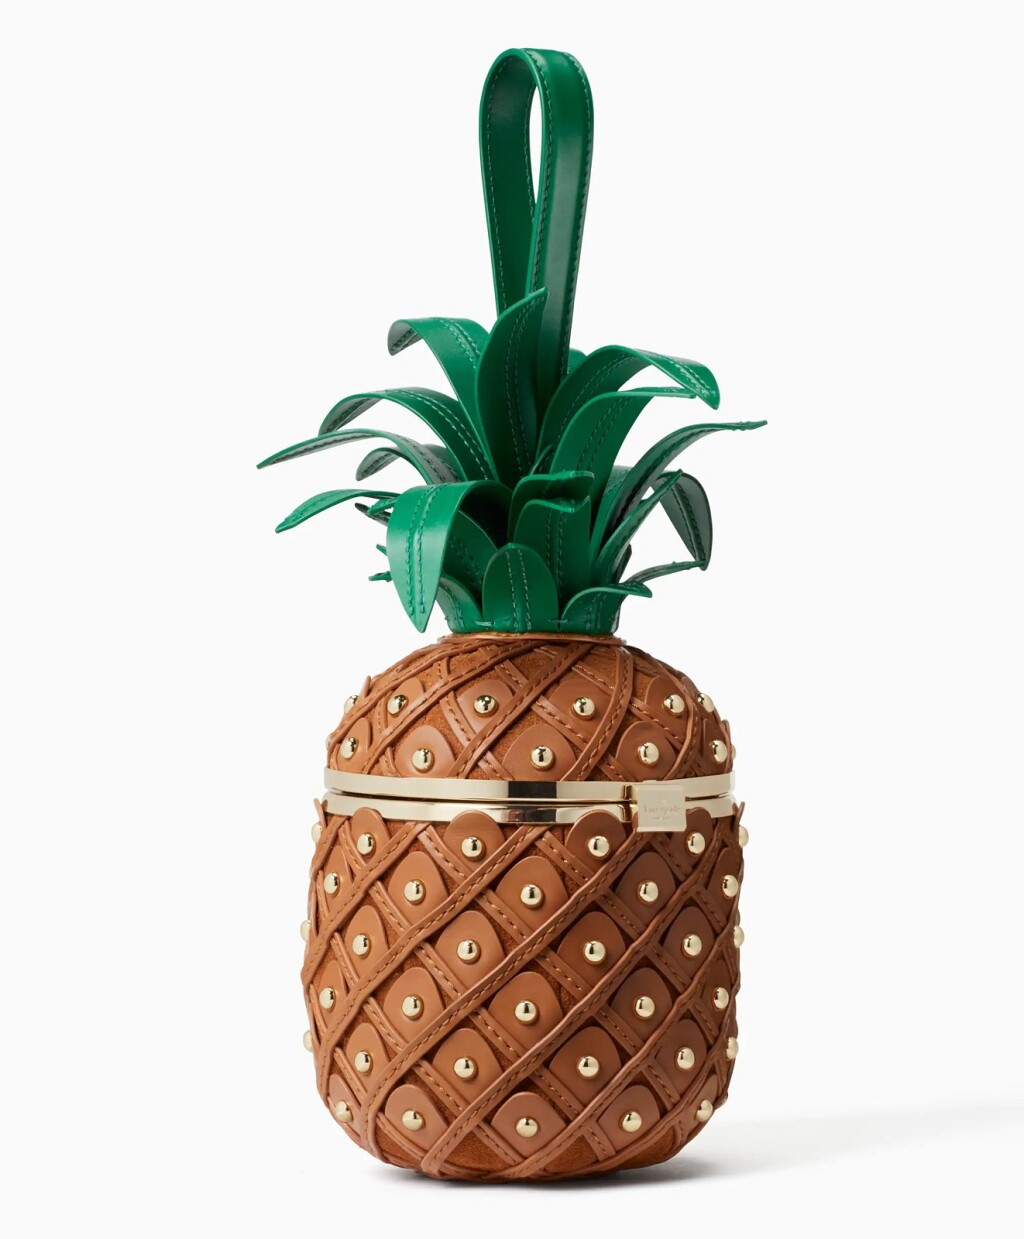 Kate Spade torbica u obliku ananasa, 1307 kn